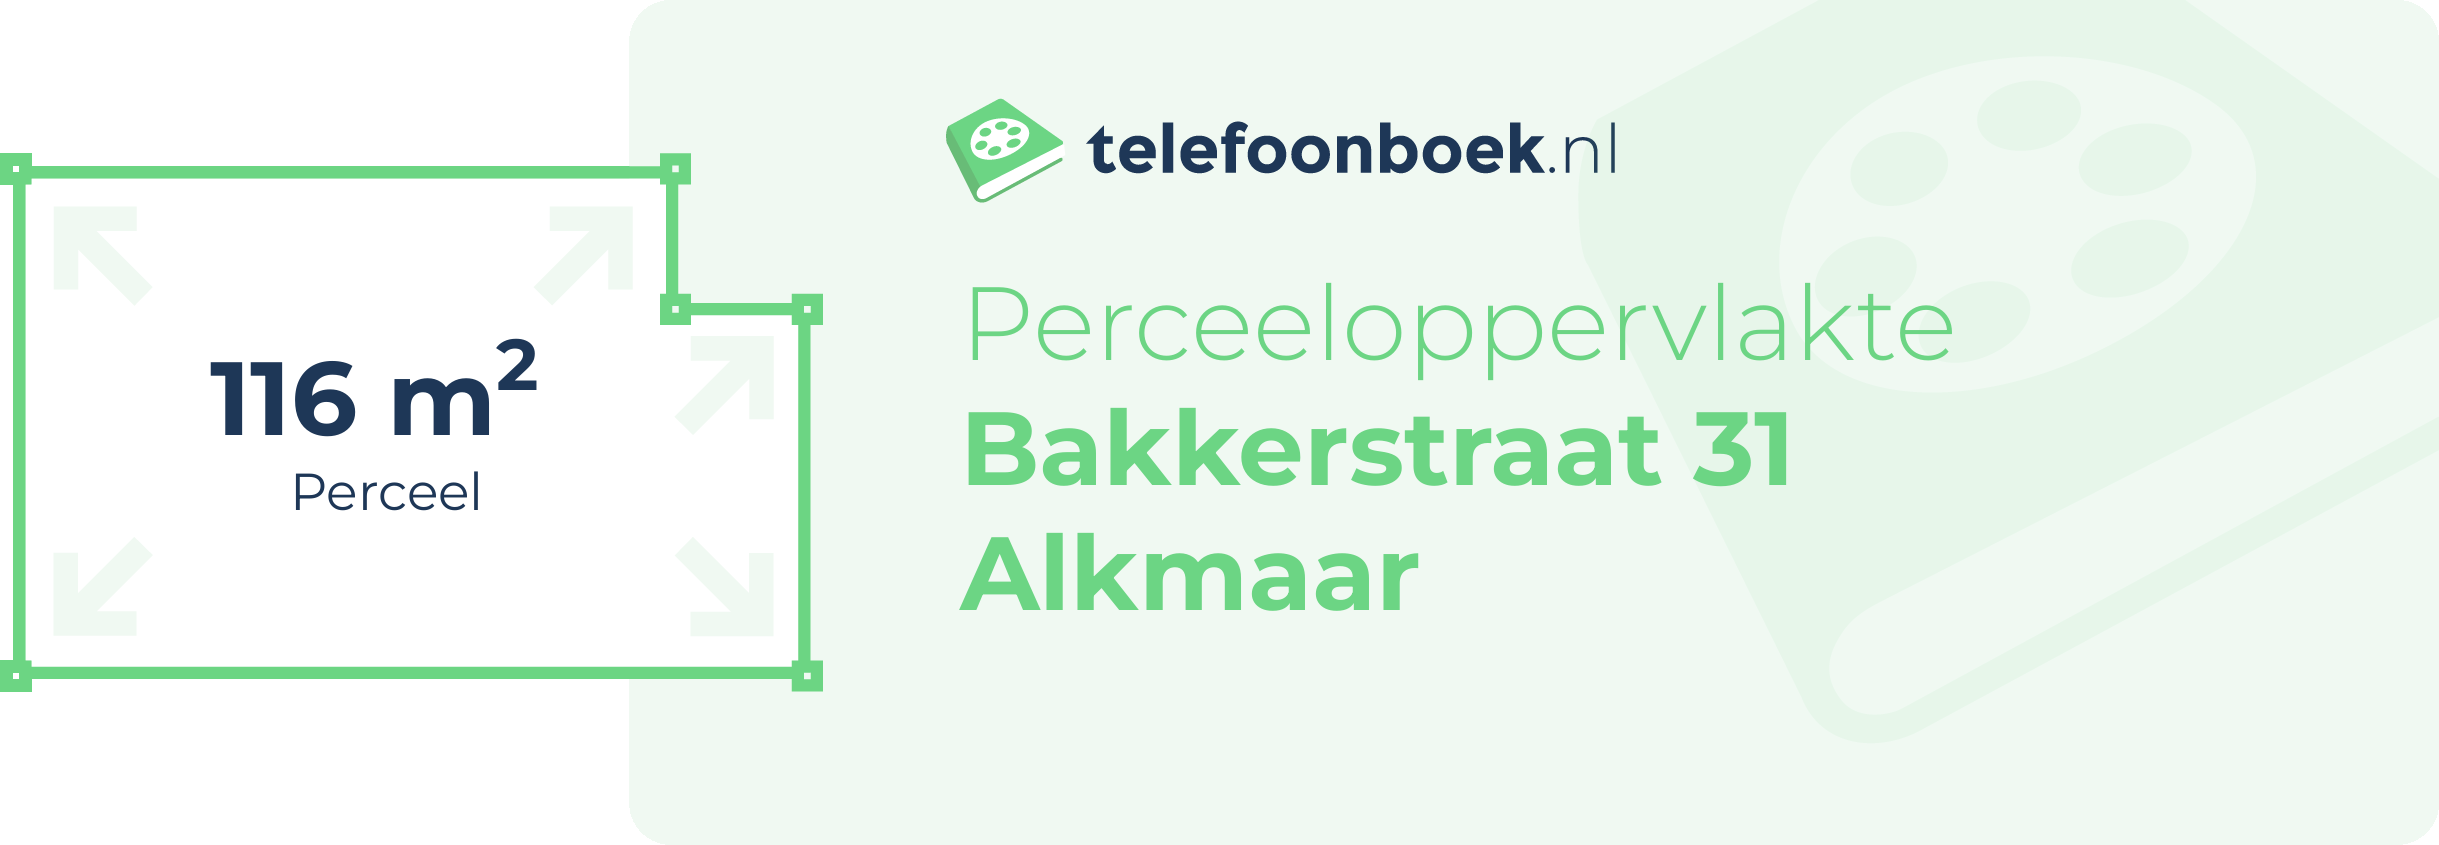 Perceeloppervlakte Bakkerstraat 31 Alkmaar